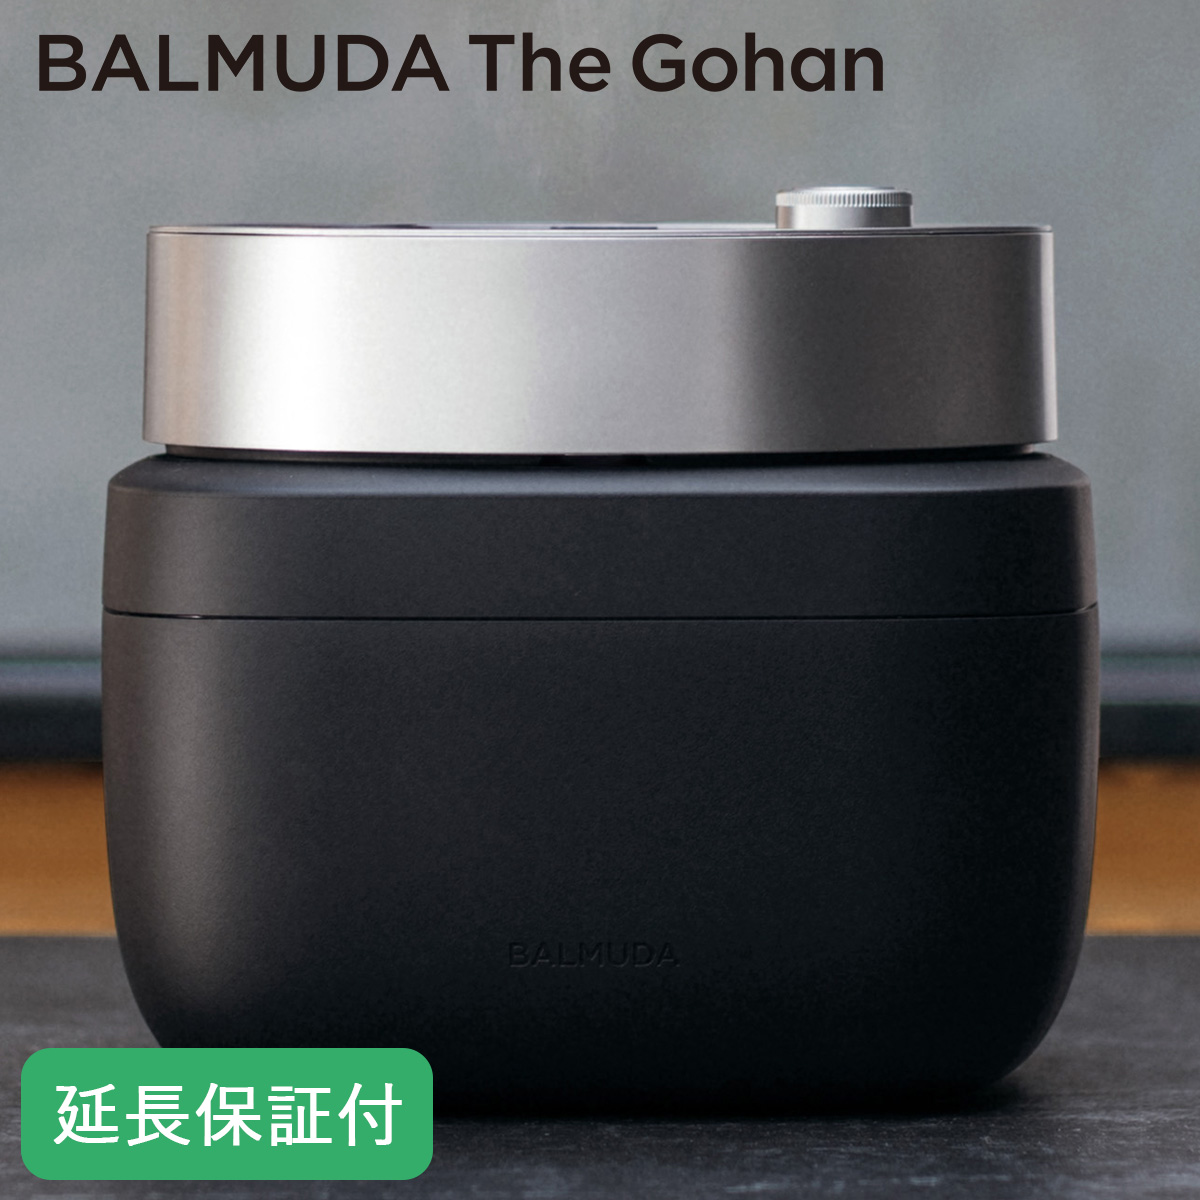 BALMUDA The Gohan 正規品 ザ・ゴハン 炊飯器 3合 電気炊飯器 炊飯ジャー ブラック　K08A-BK